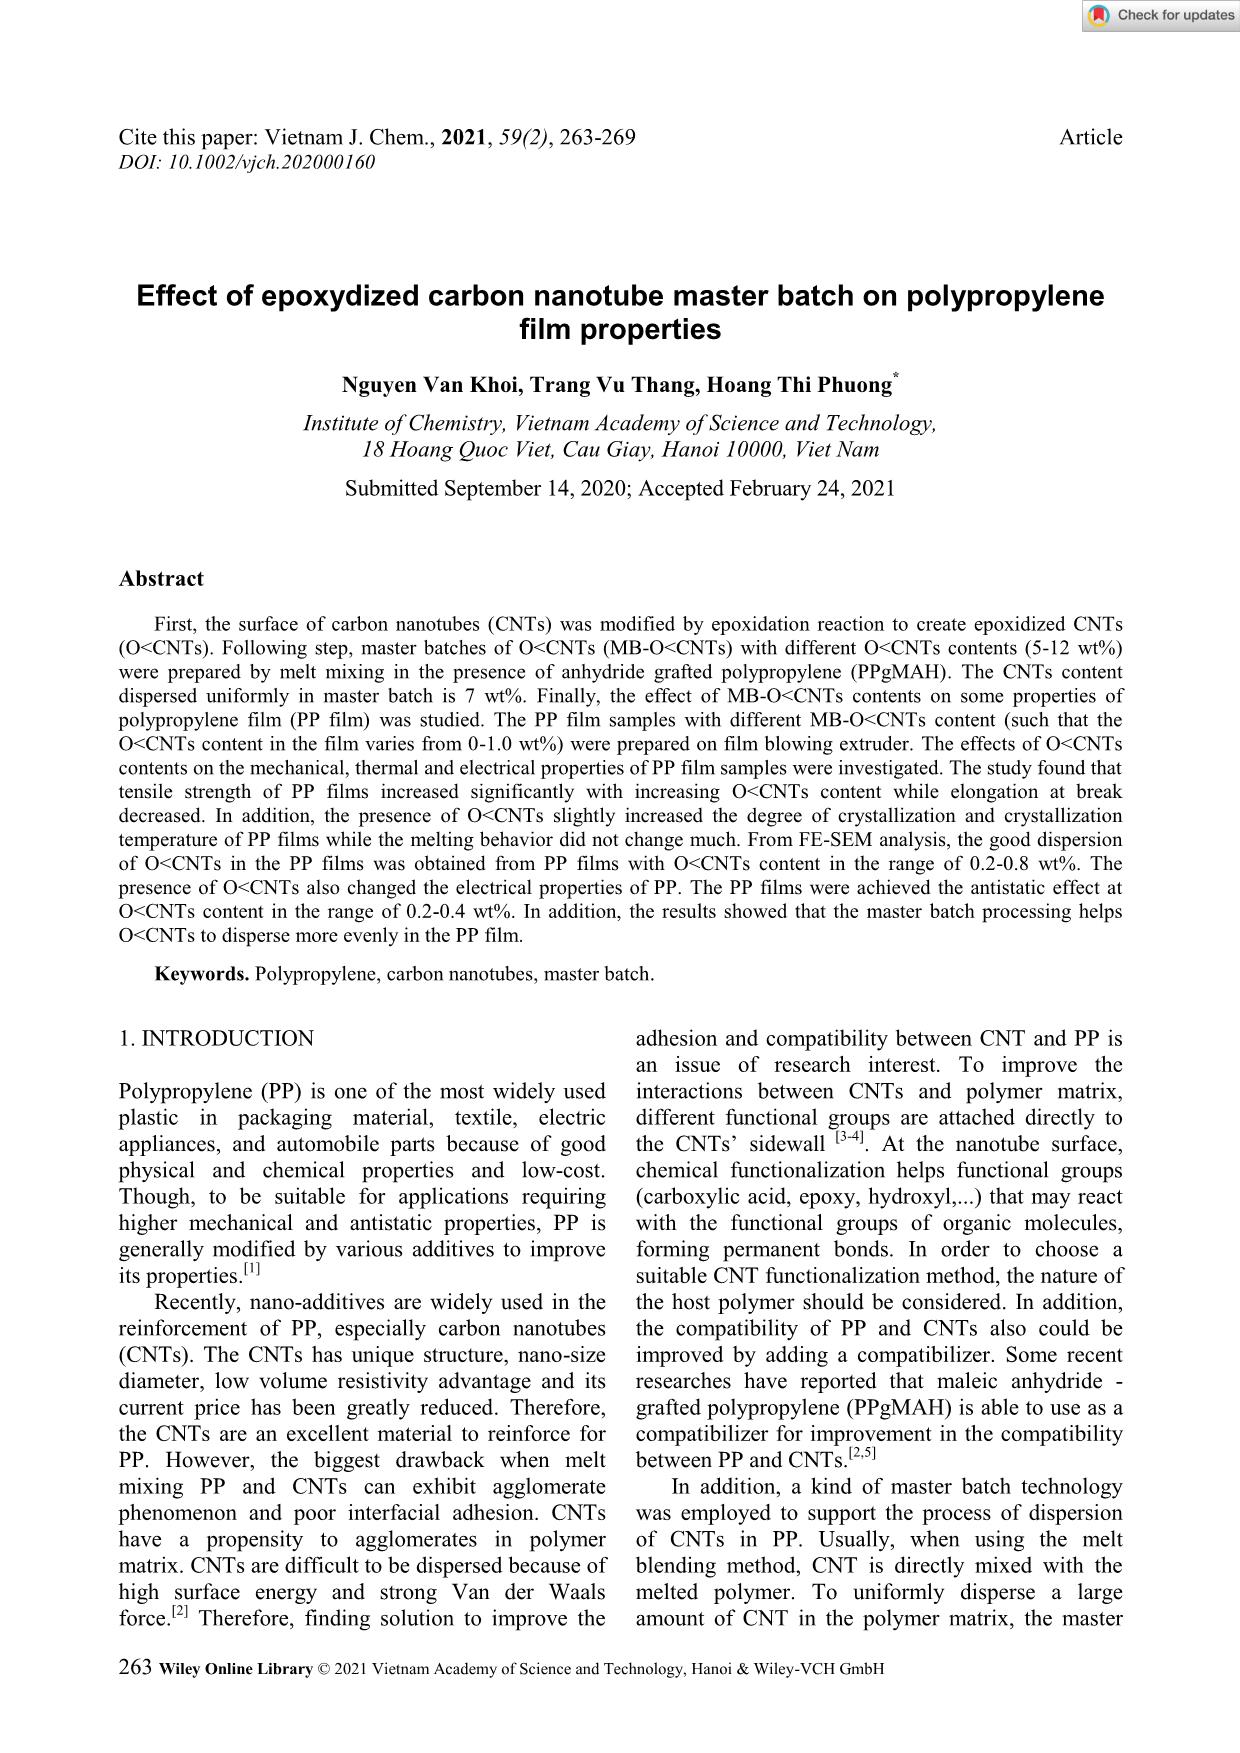 Effect of epoxydized carbon nanotube master batch on polypropylene film properties trang 1